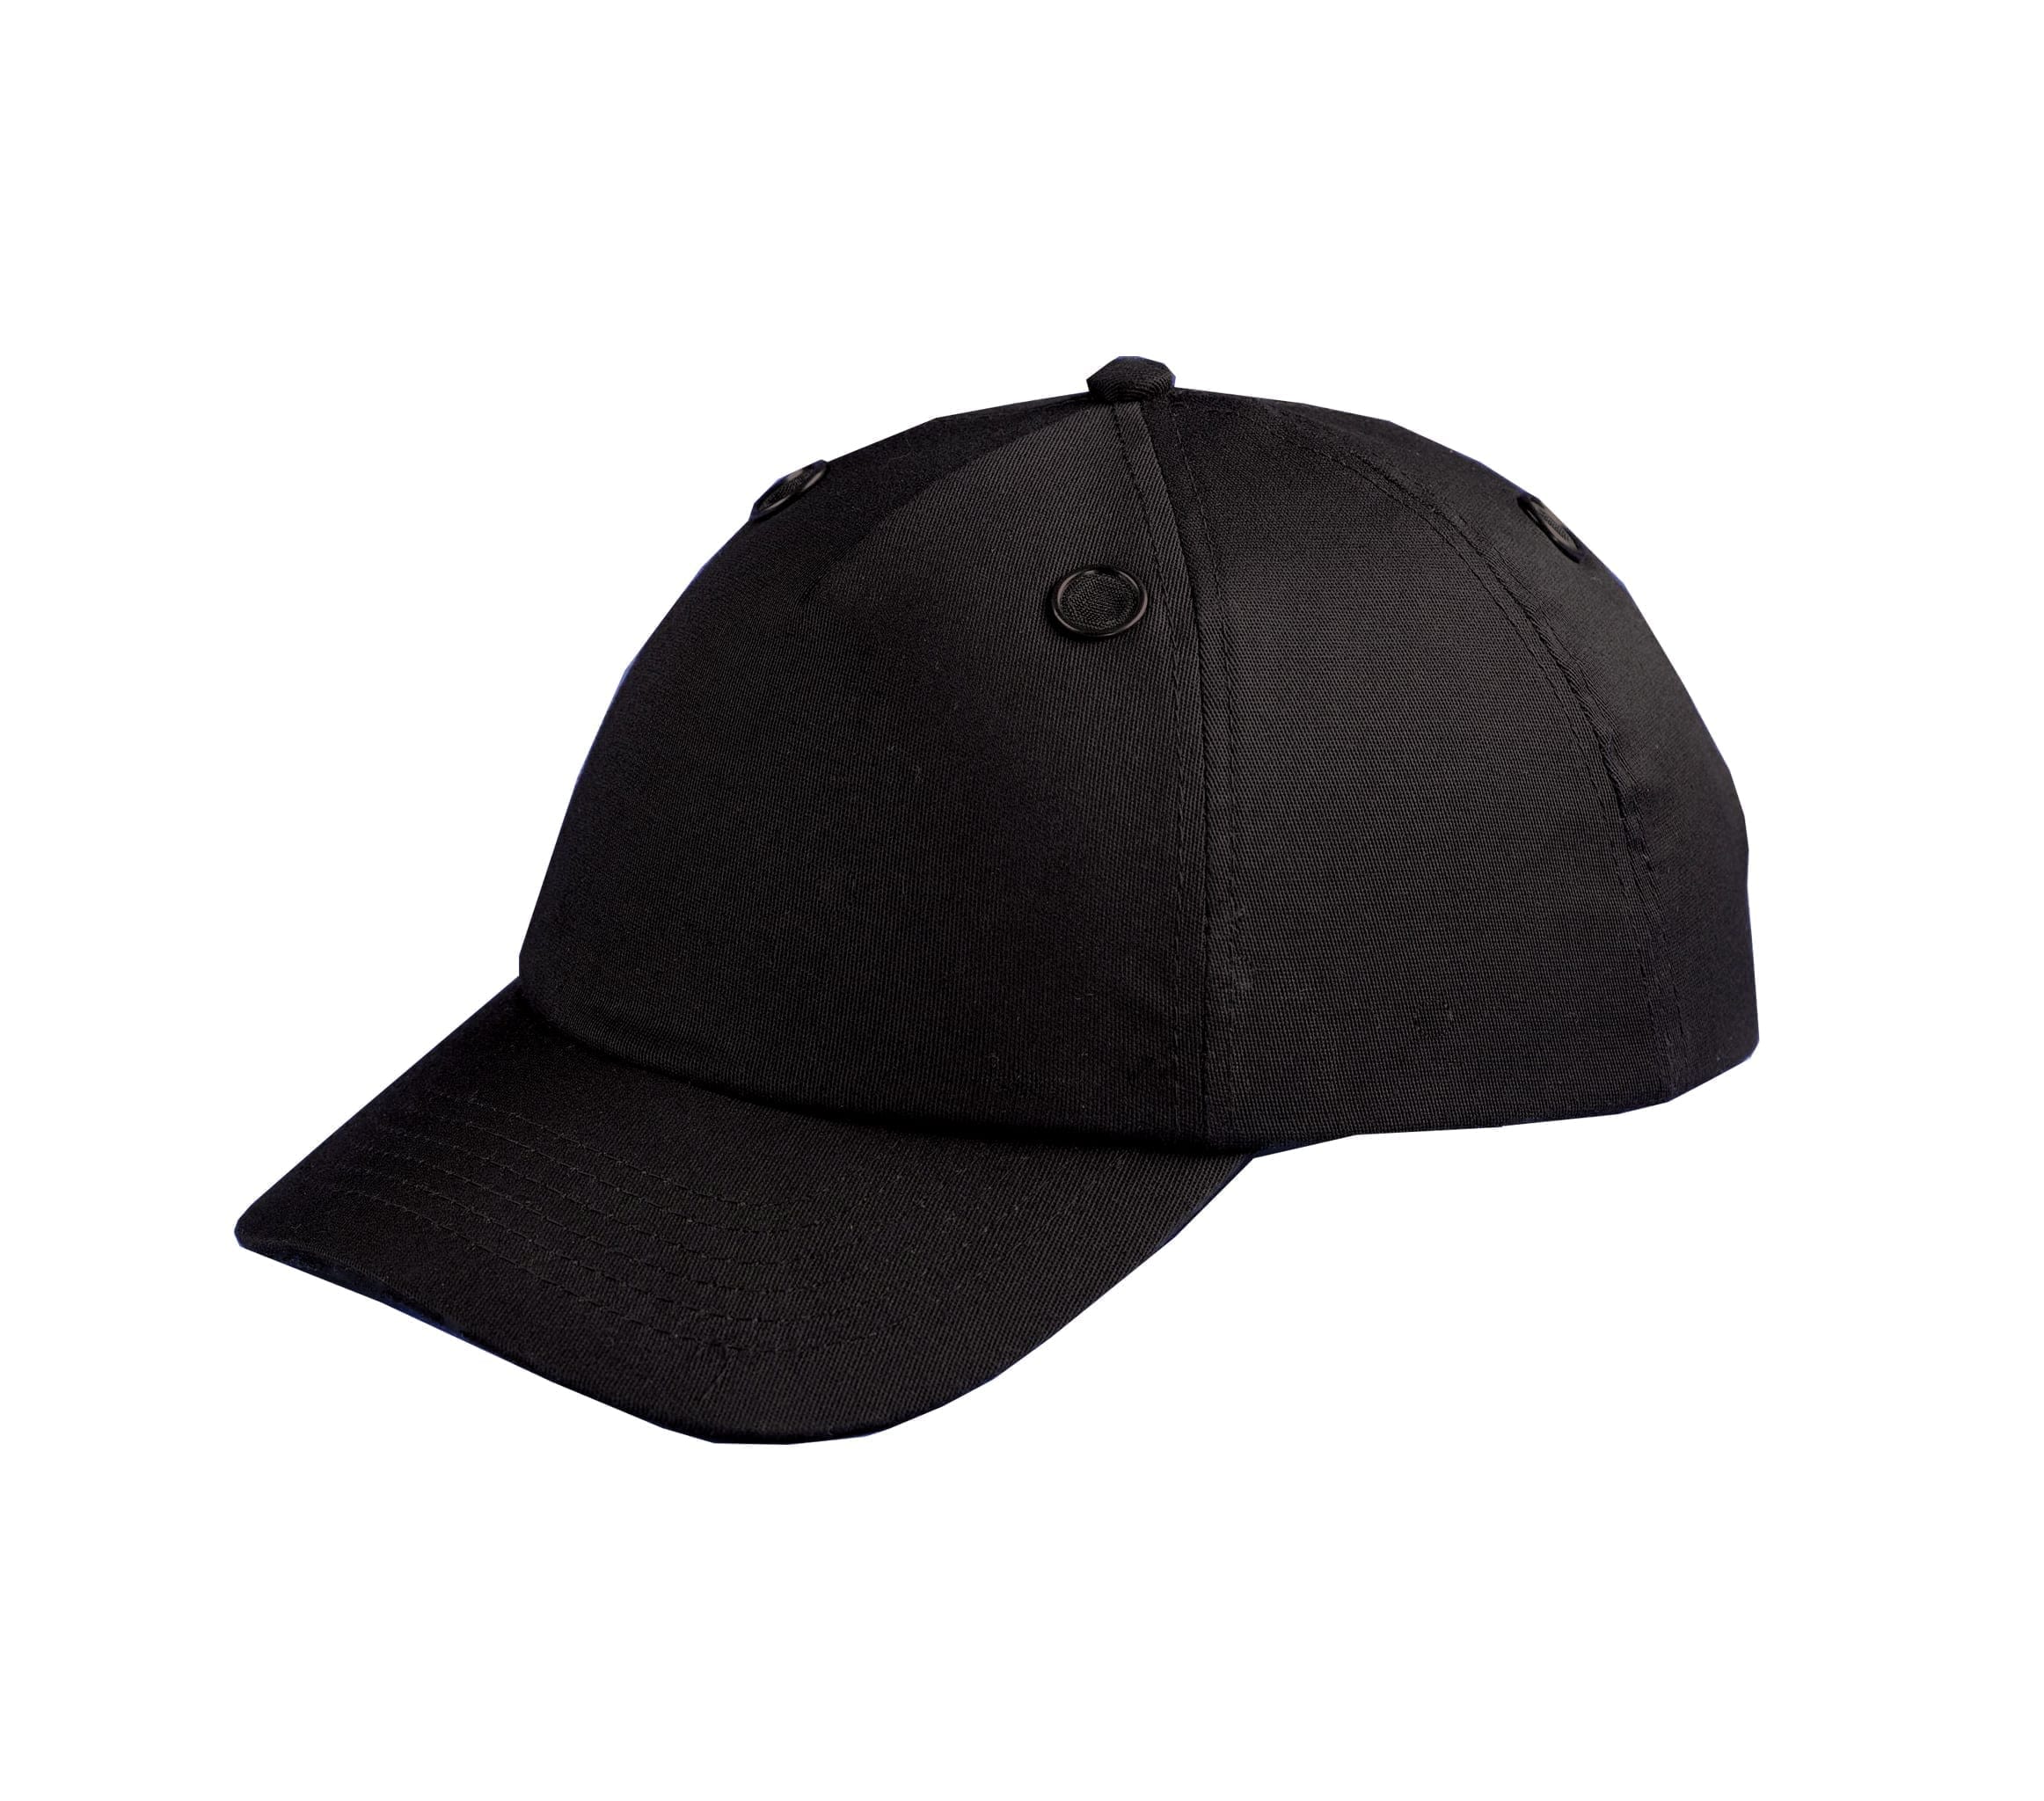 Centurion Safety Black Standard Peak Bump Cap, ABS Protective Material